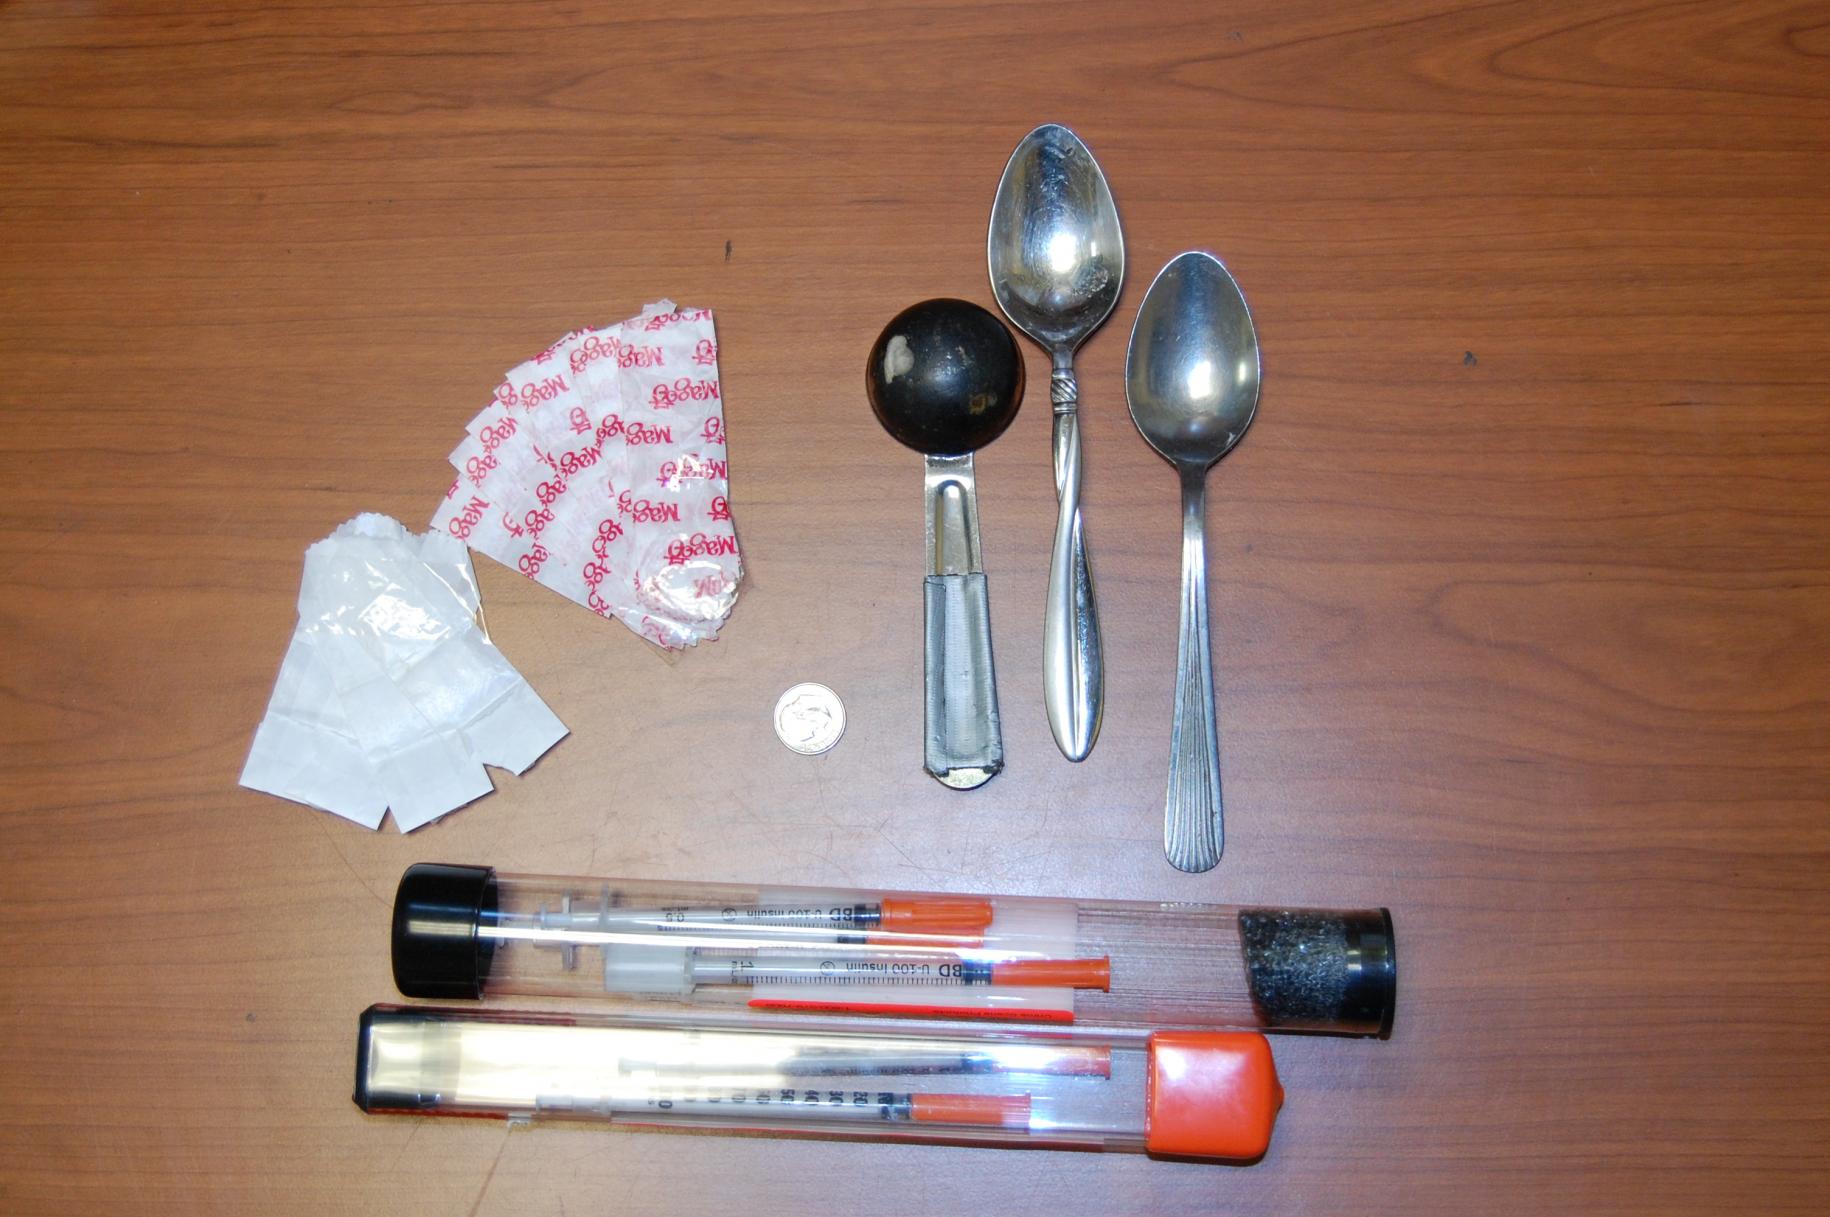 Saratoga Springs police caution public about heroin paraphernalia ...